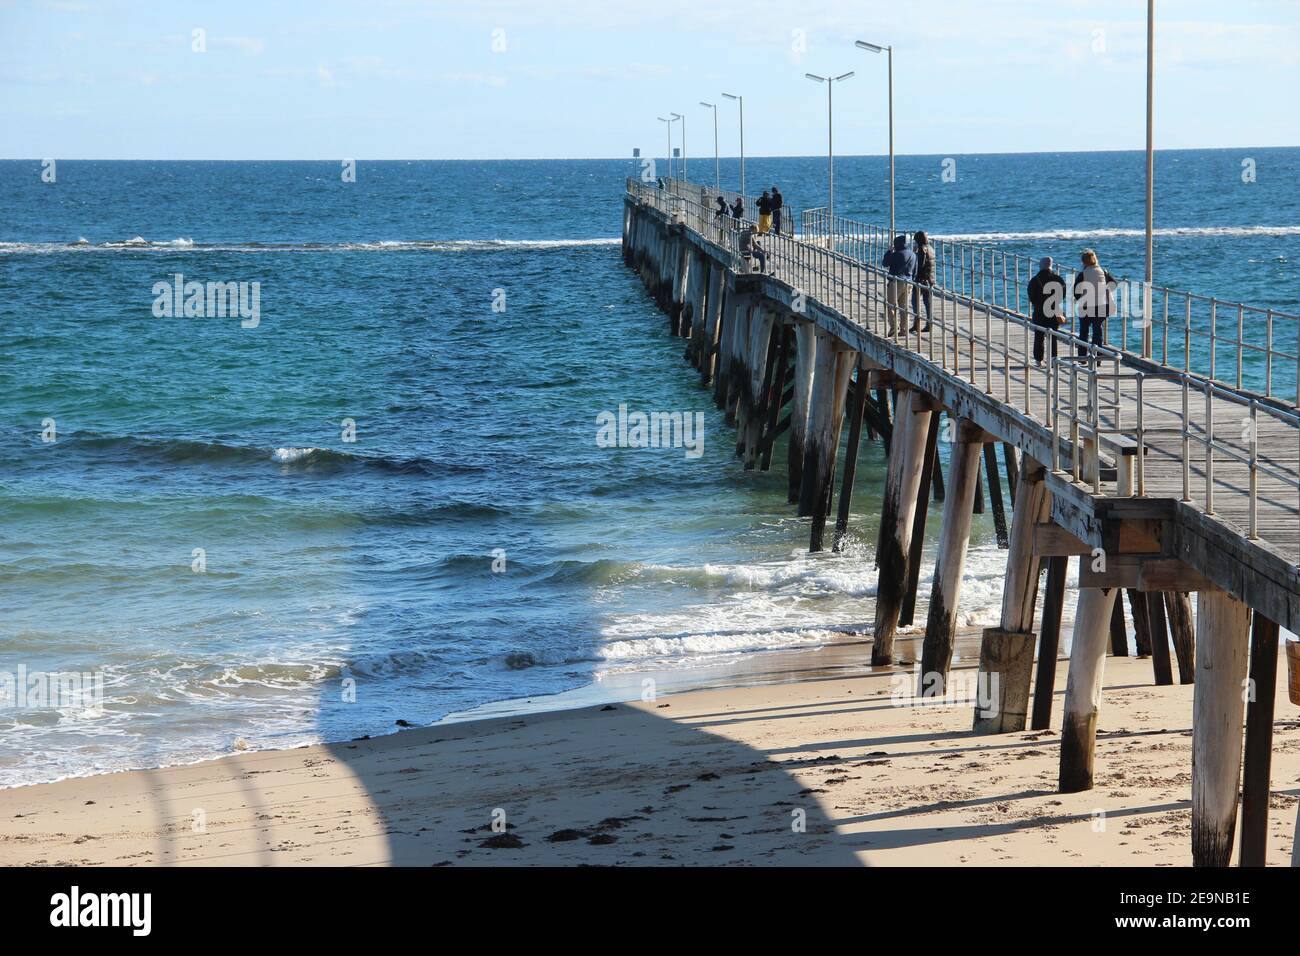 Port Noarlunga Jetty near Adelaide in South Australia Stock Photo